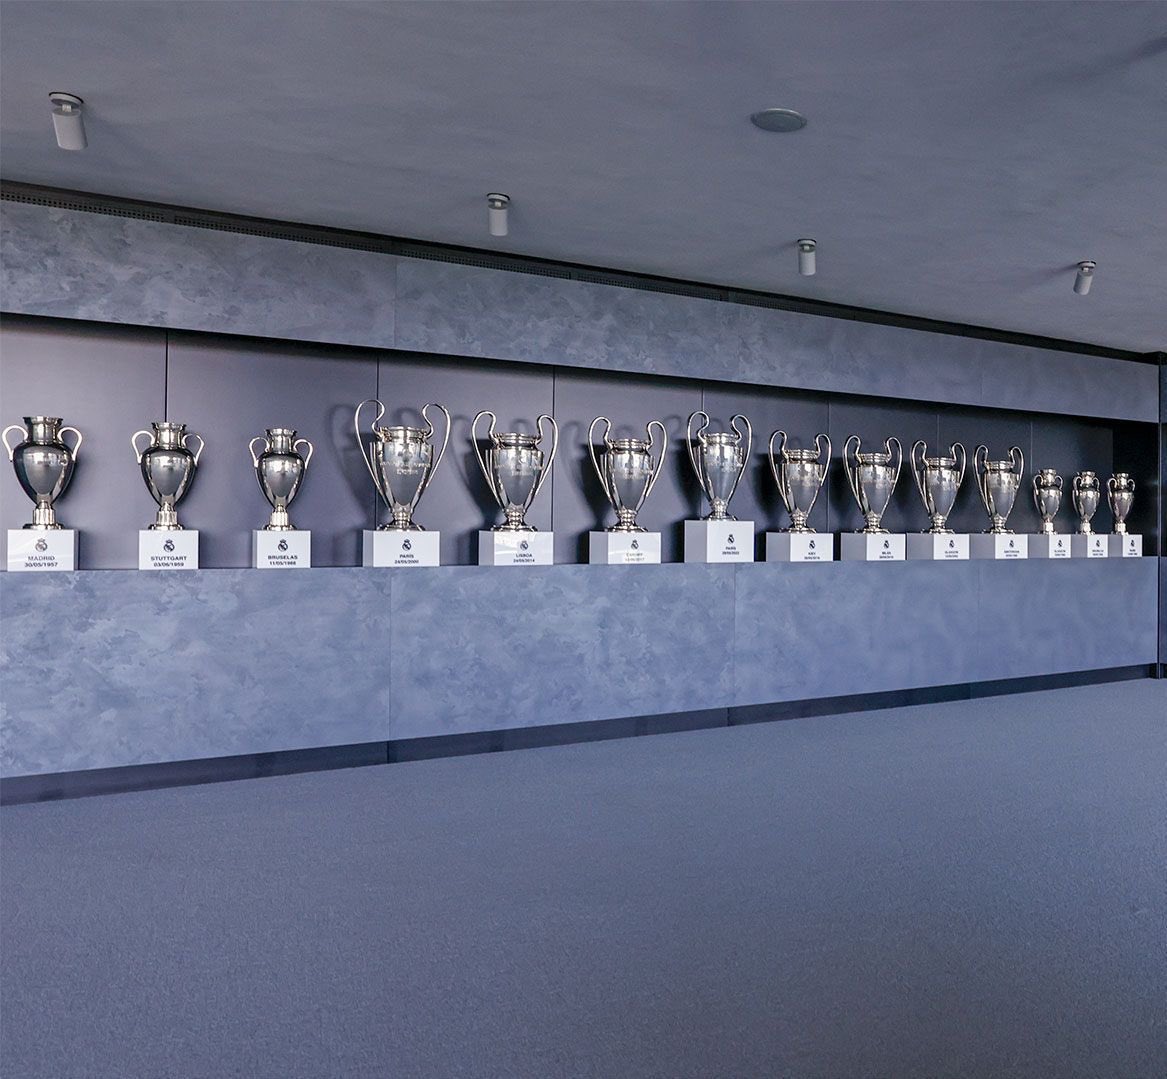 Madrid Zone on X: The Champions League winners list.🏆   / X